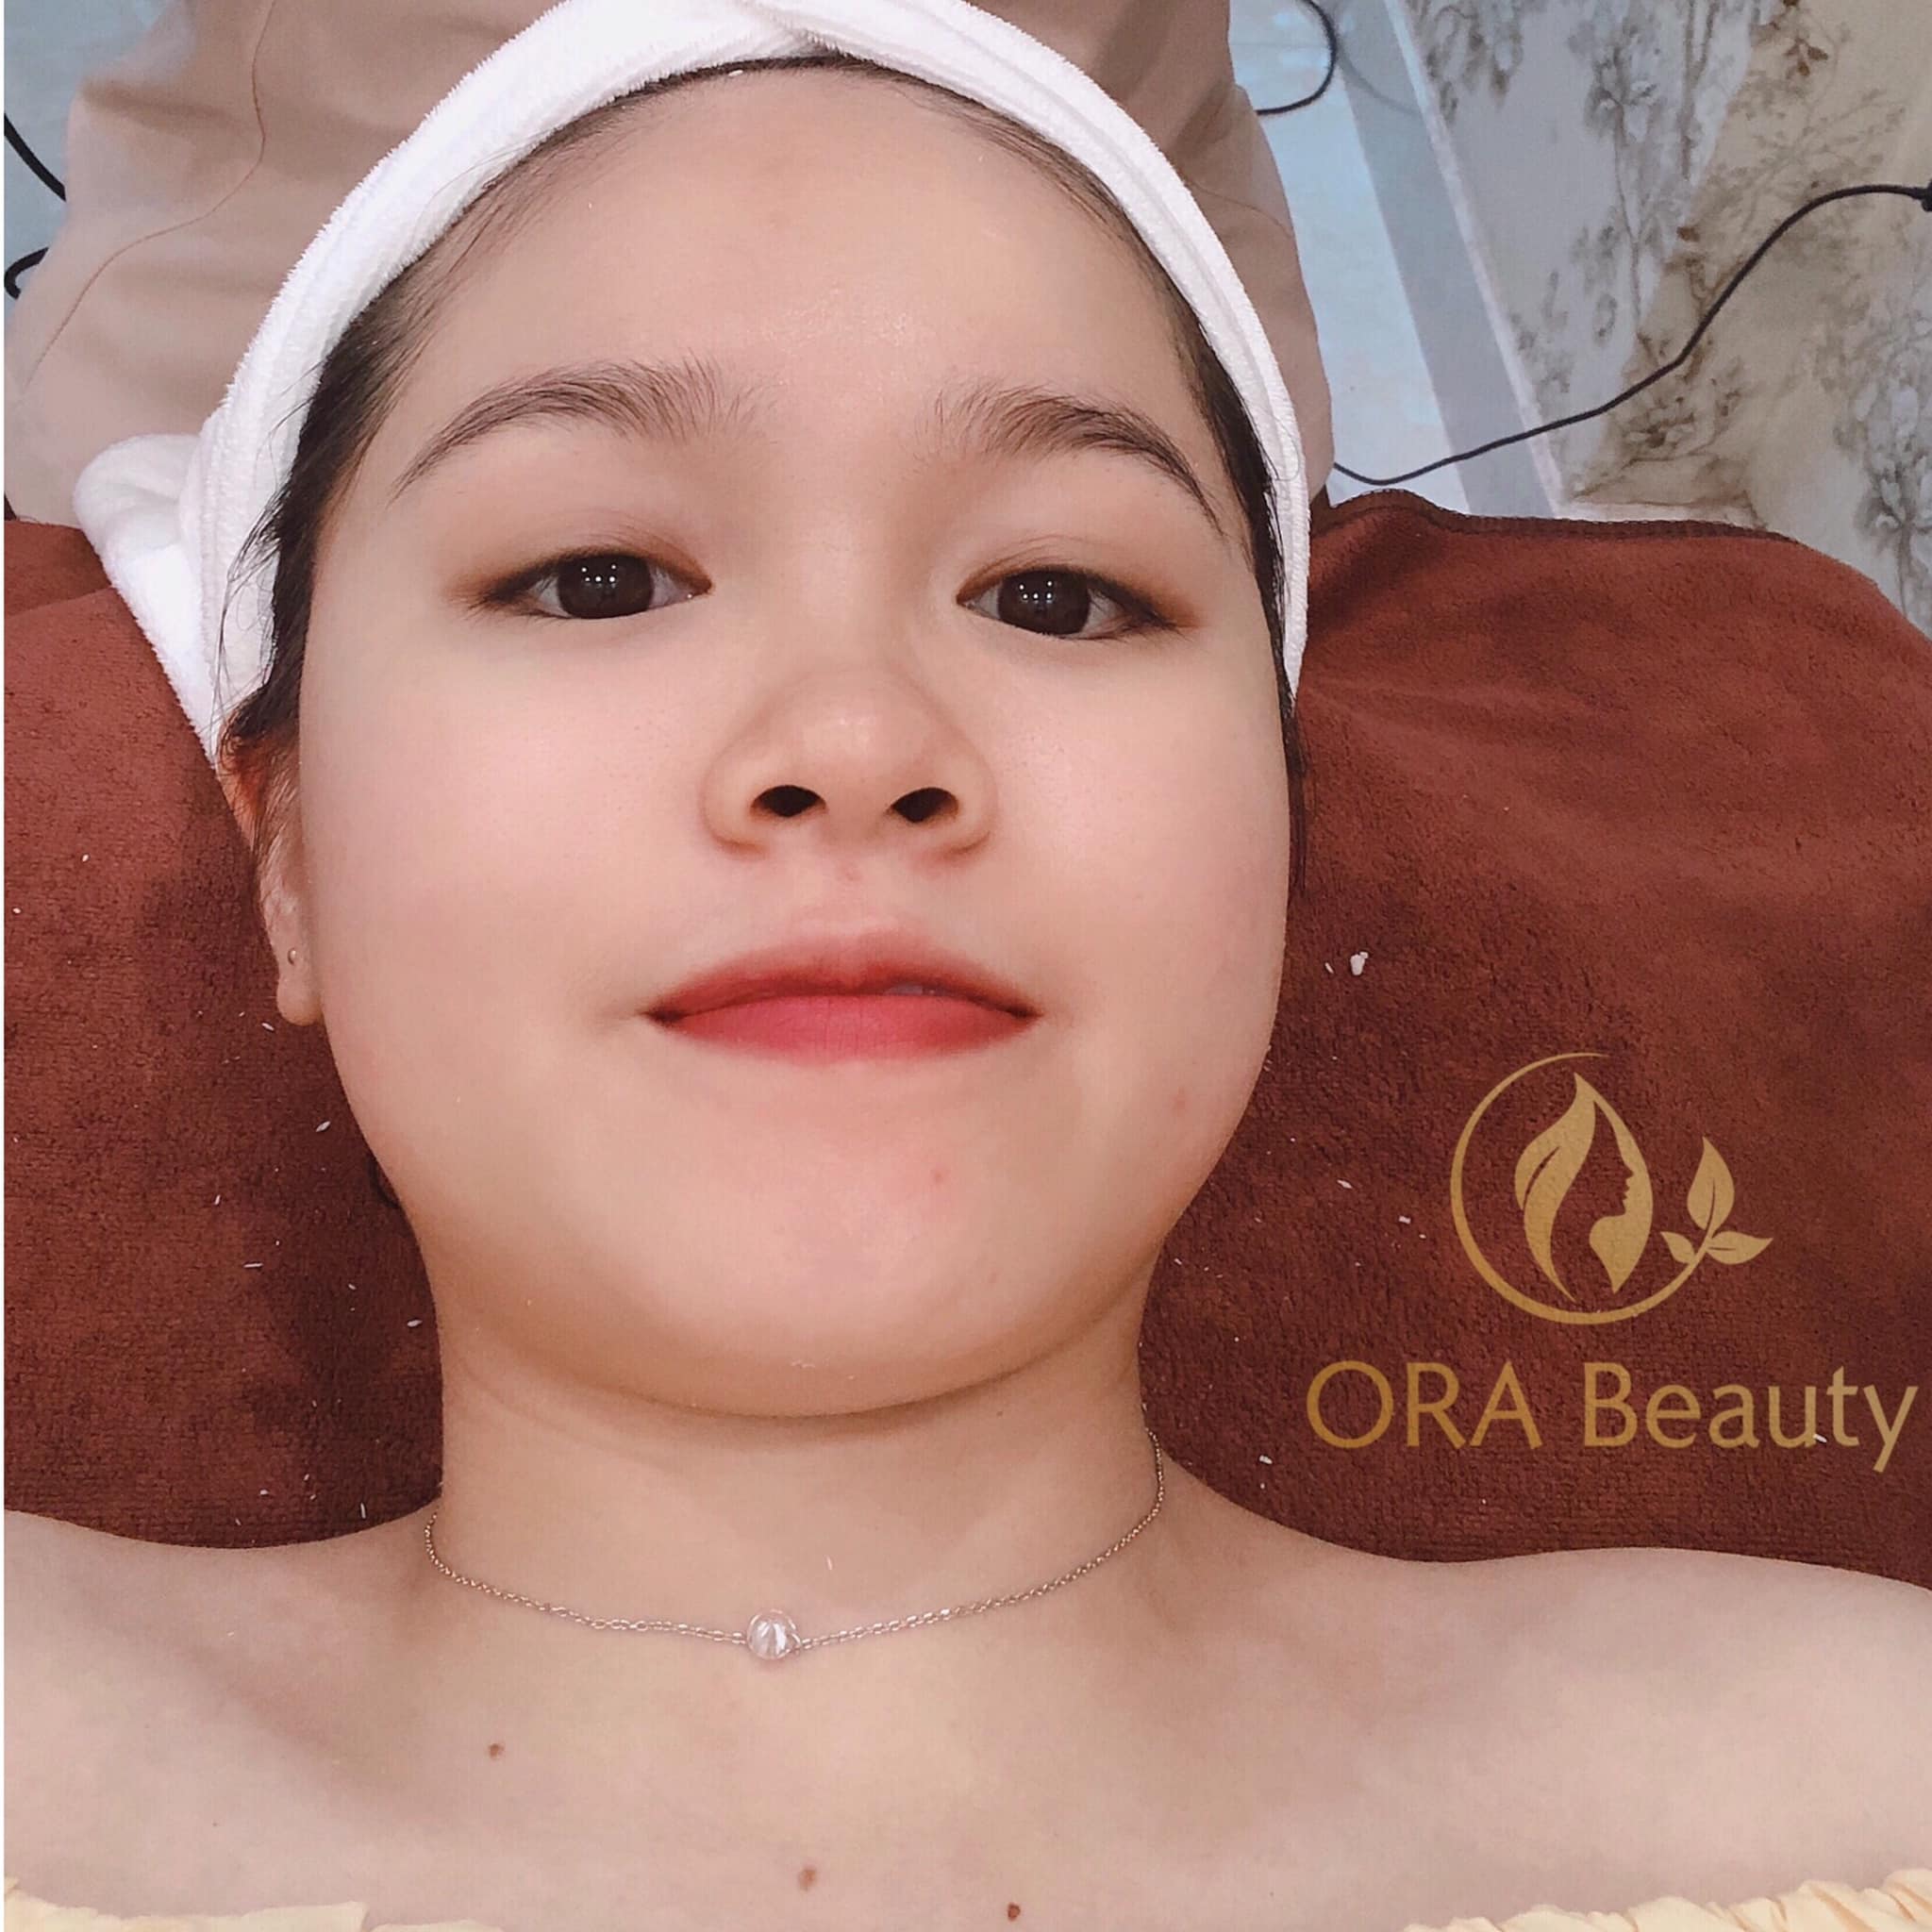 Dịch vụ Ora beauty